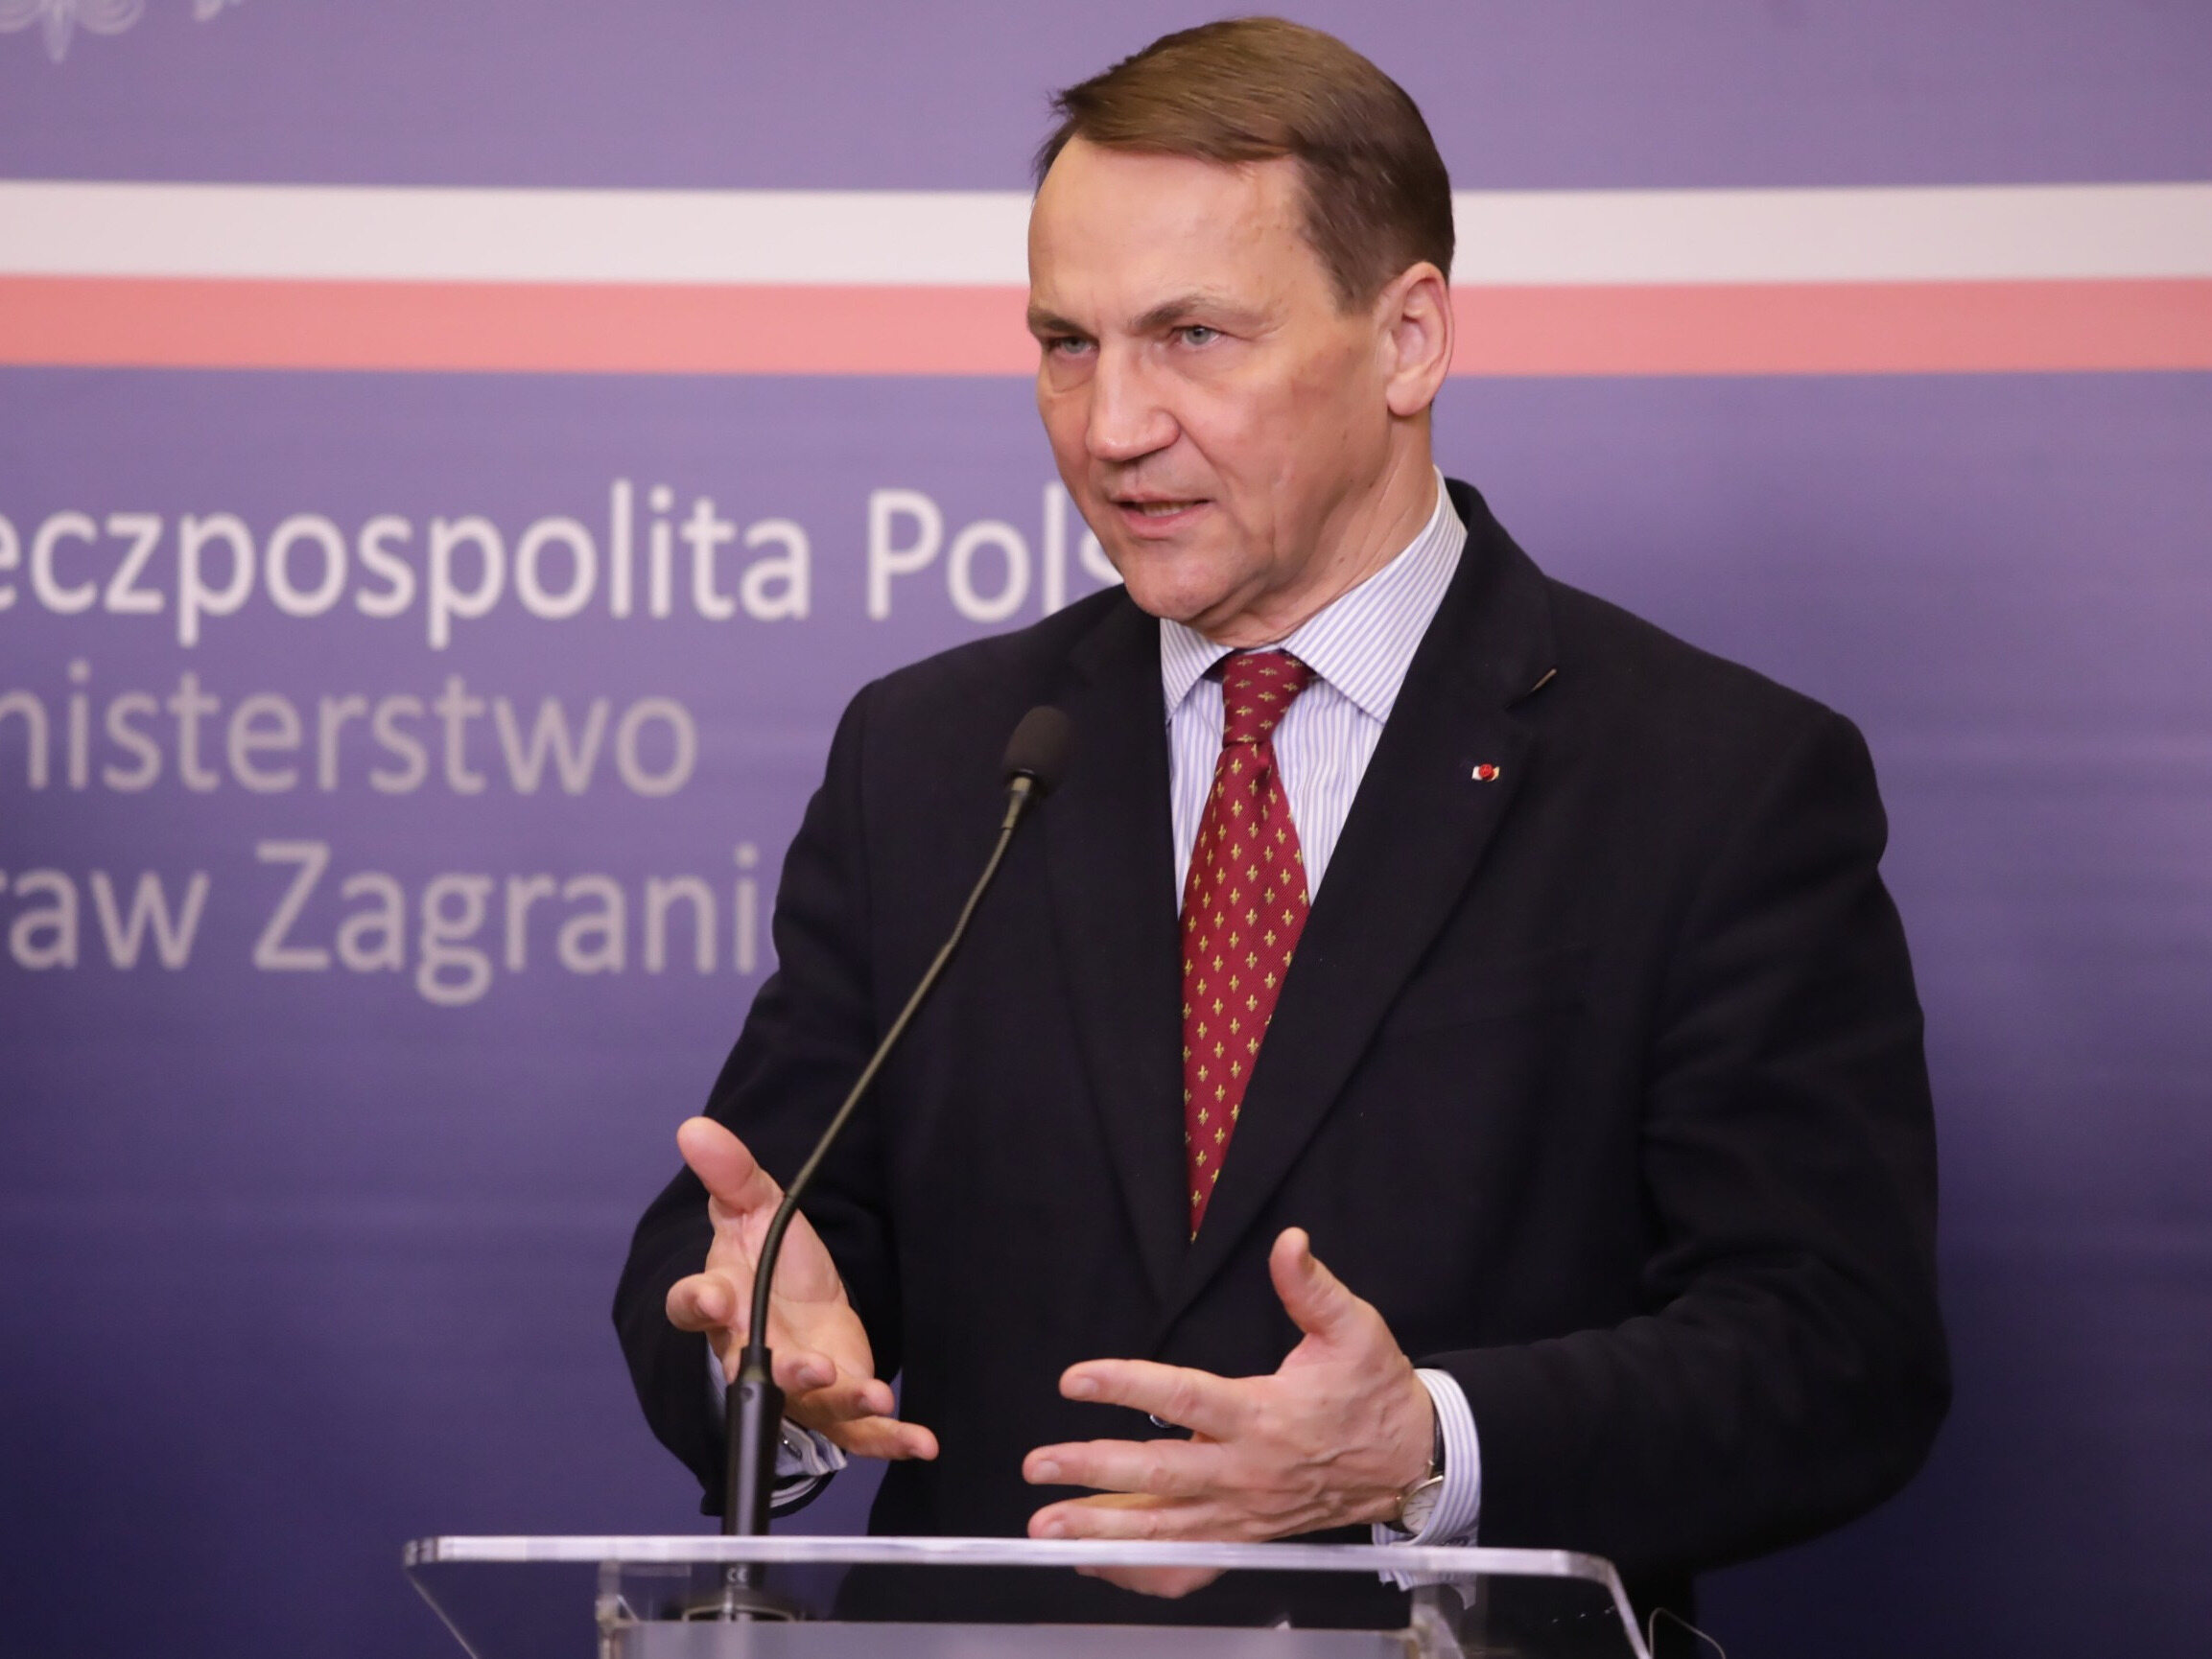 Putin mentioned Poland.  Sikorski's decisive reaction